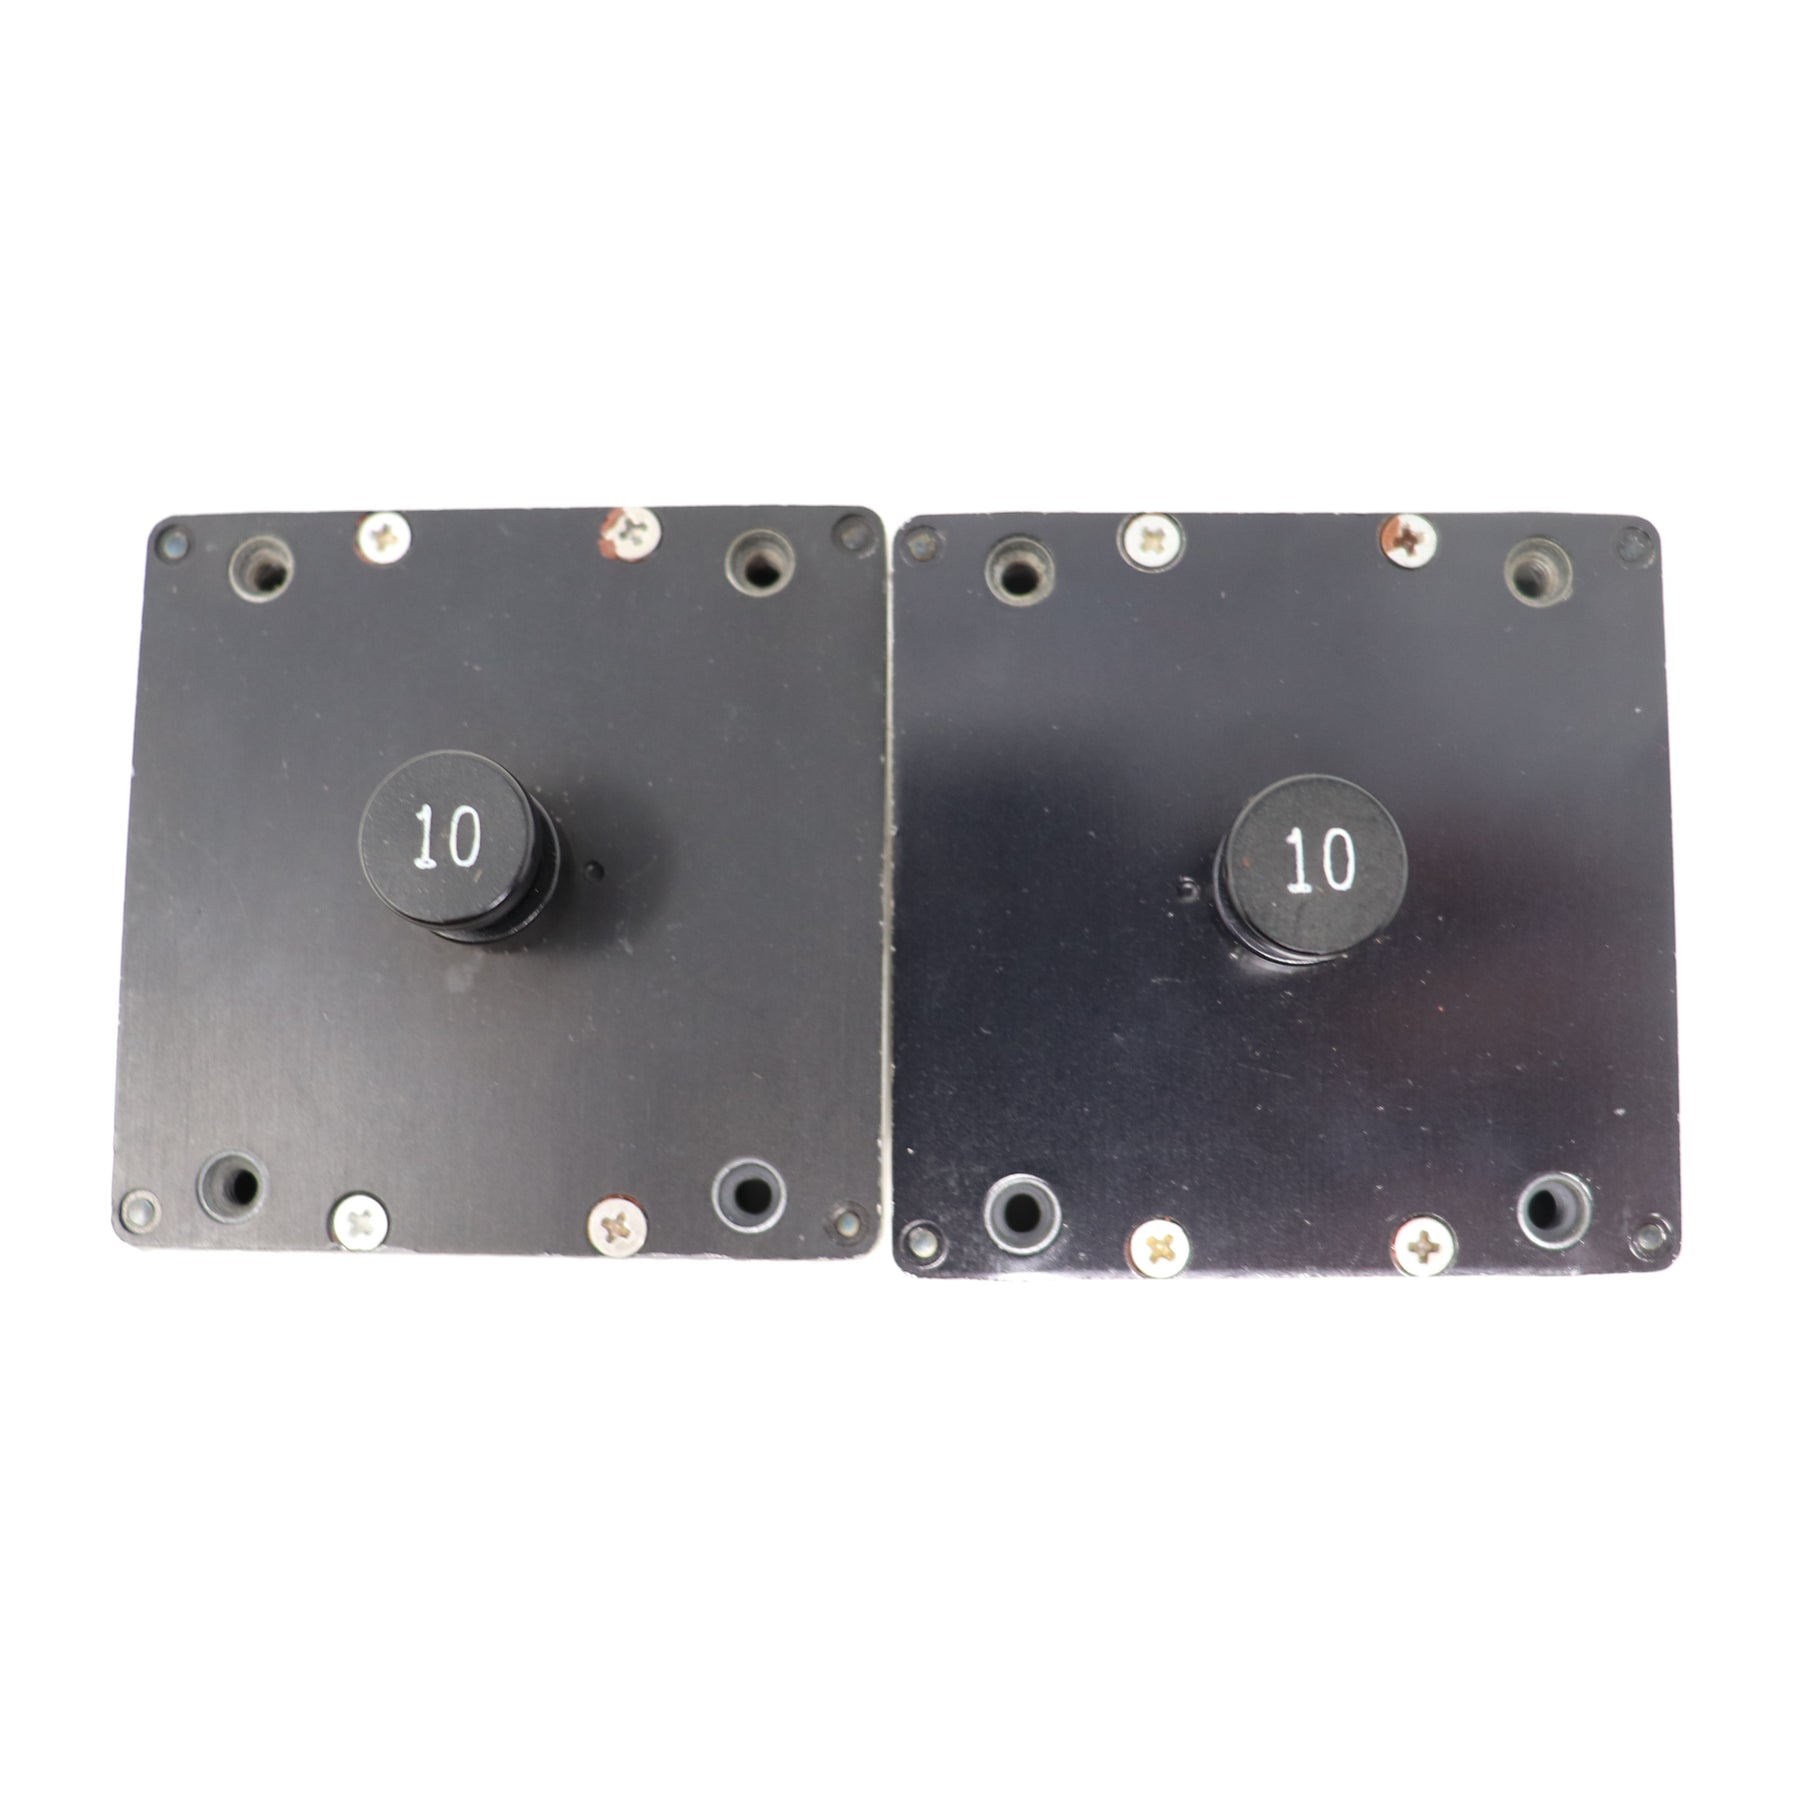 2 Pack Klixon 10 amp 3 Pole Circuit Breaker D6760-1-10 MS21984-10